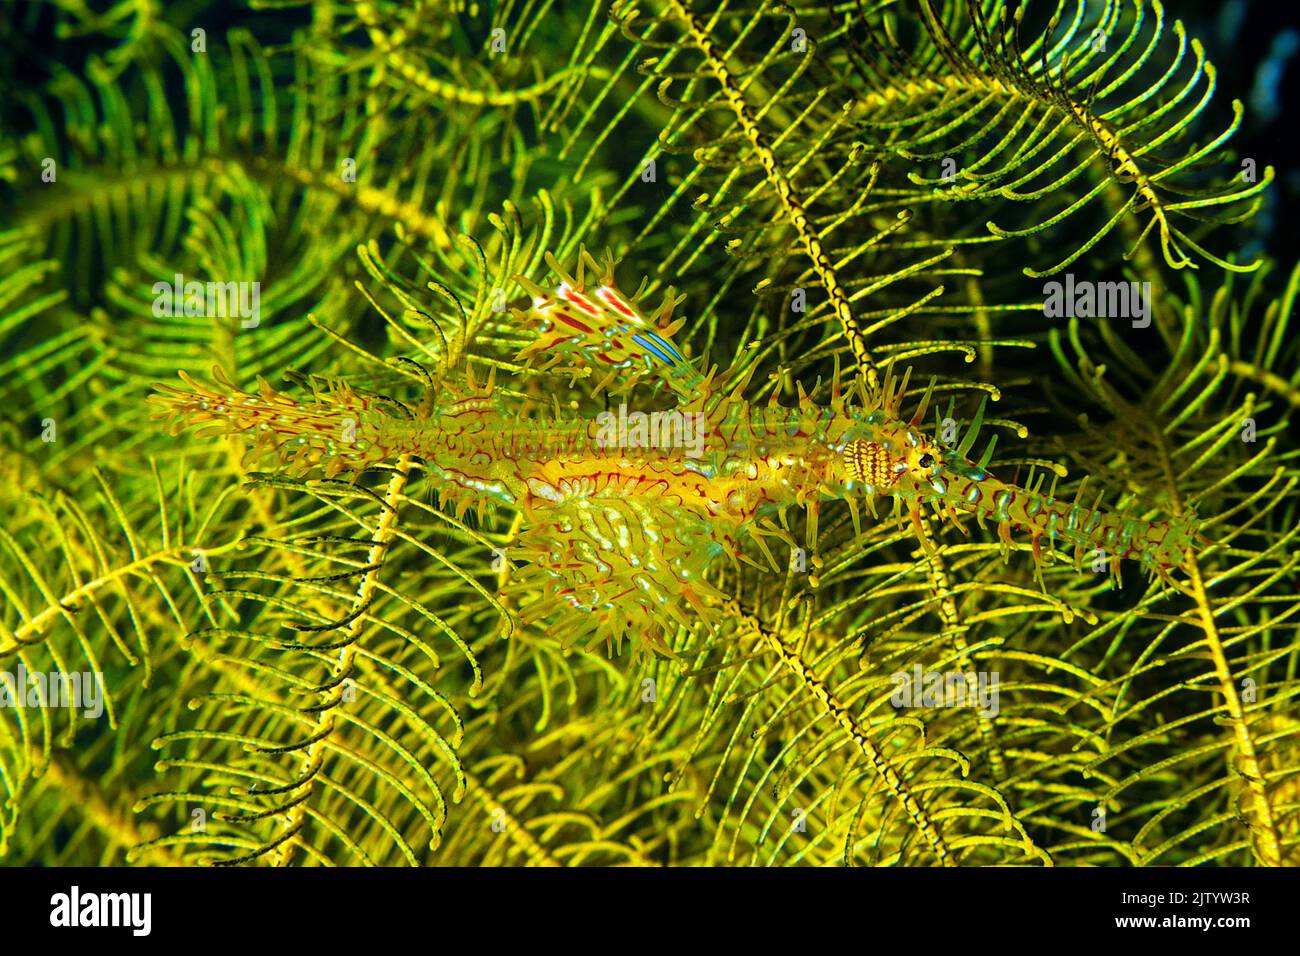 Pesci fantasma ornati o pesci fantasma arlequin (Solenostomus paradoxus), in una stella piuma (Crinoidea), Ari Atoll, Maldive, Oceano Indiano, Asia Foto Stock